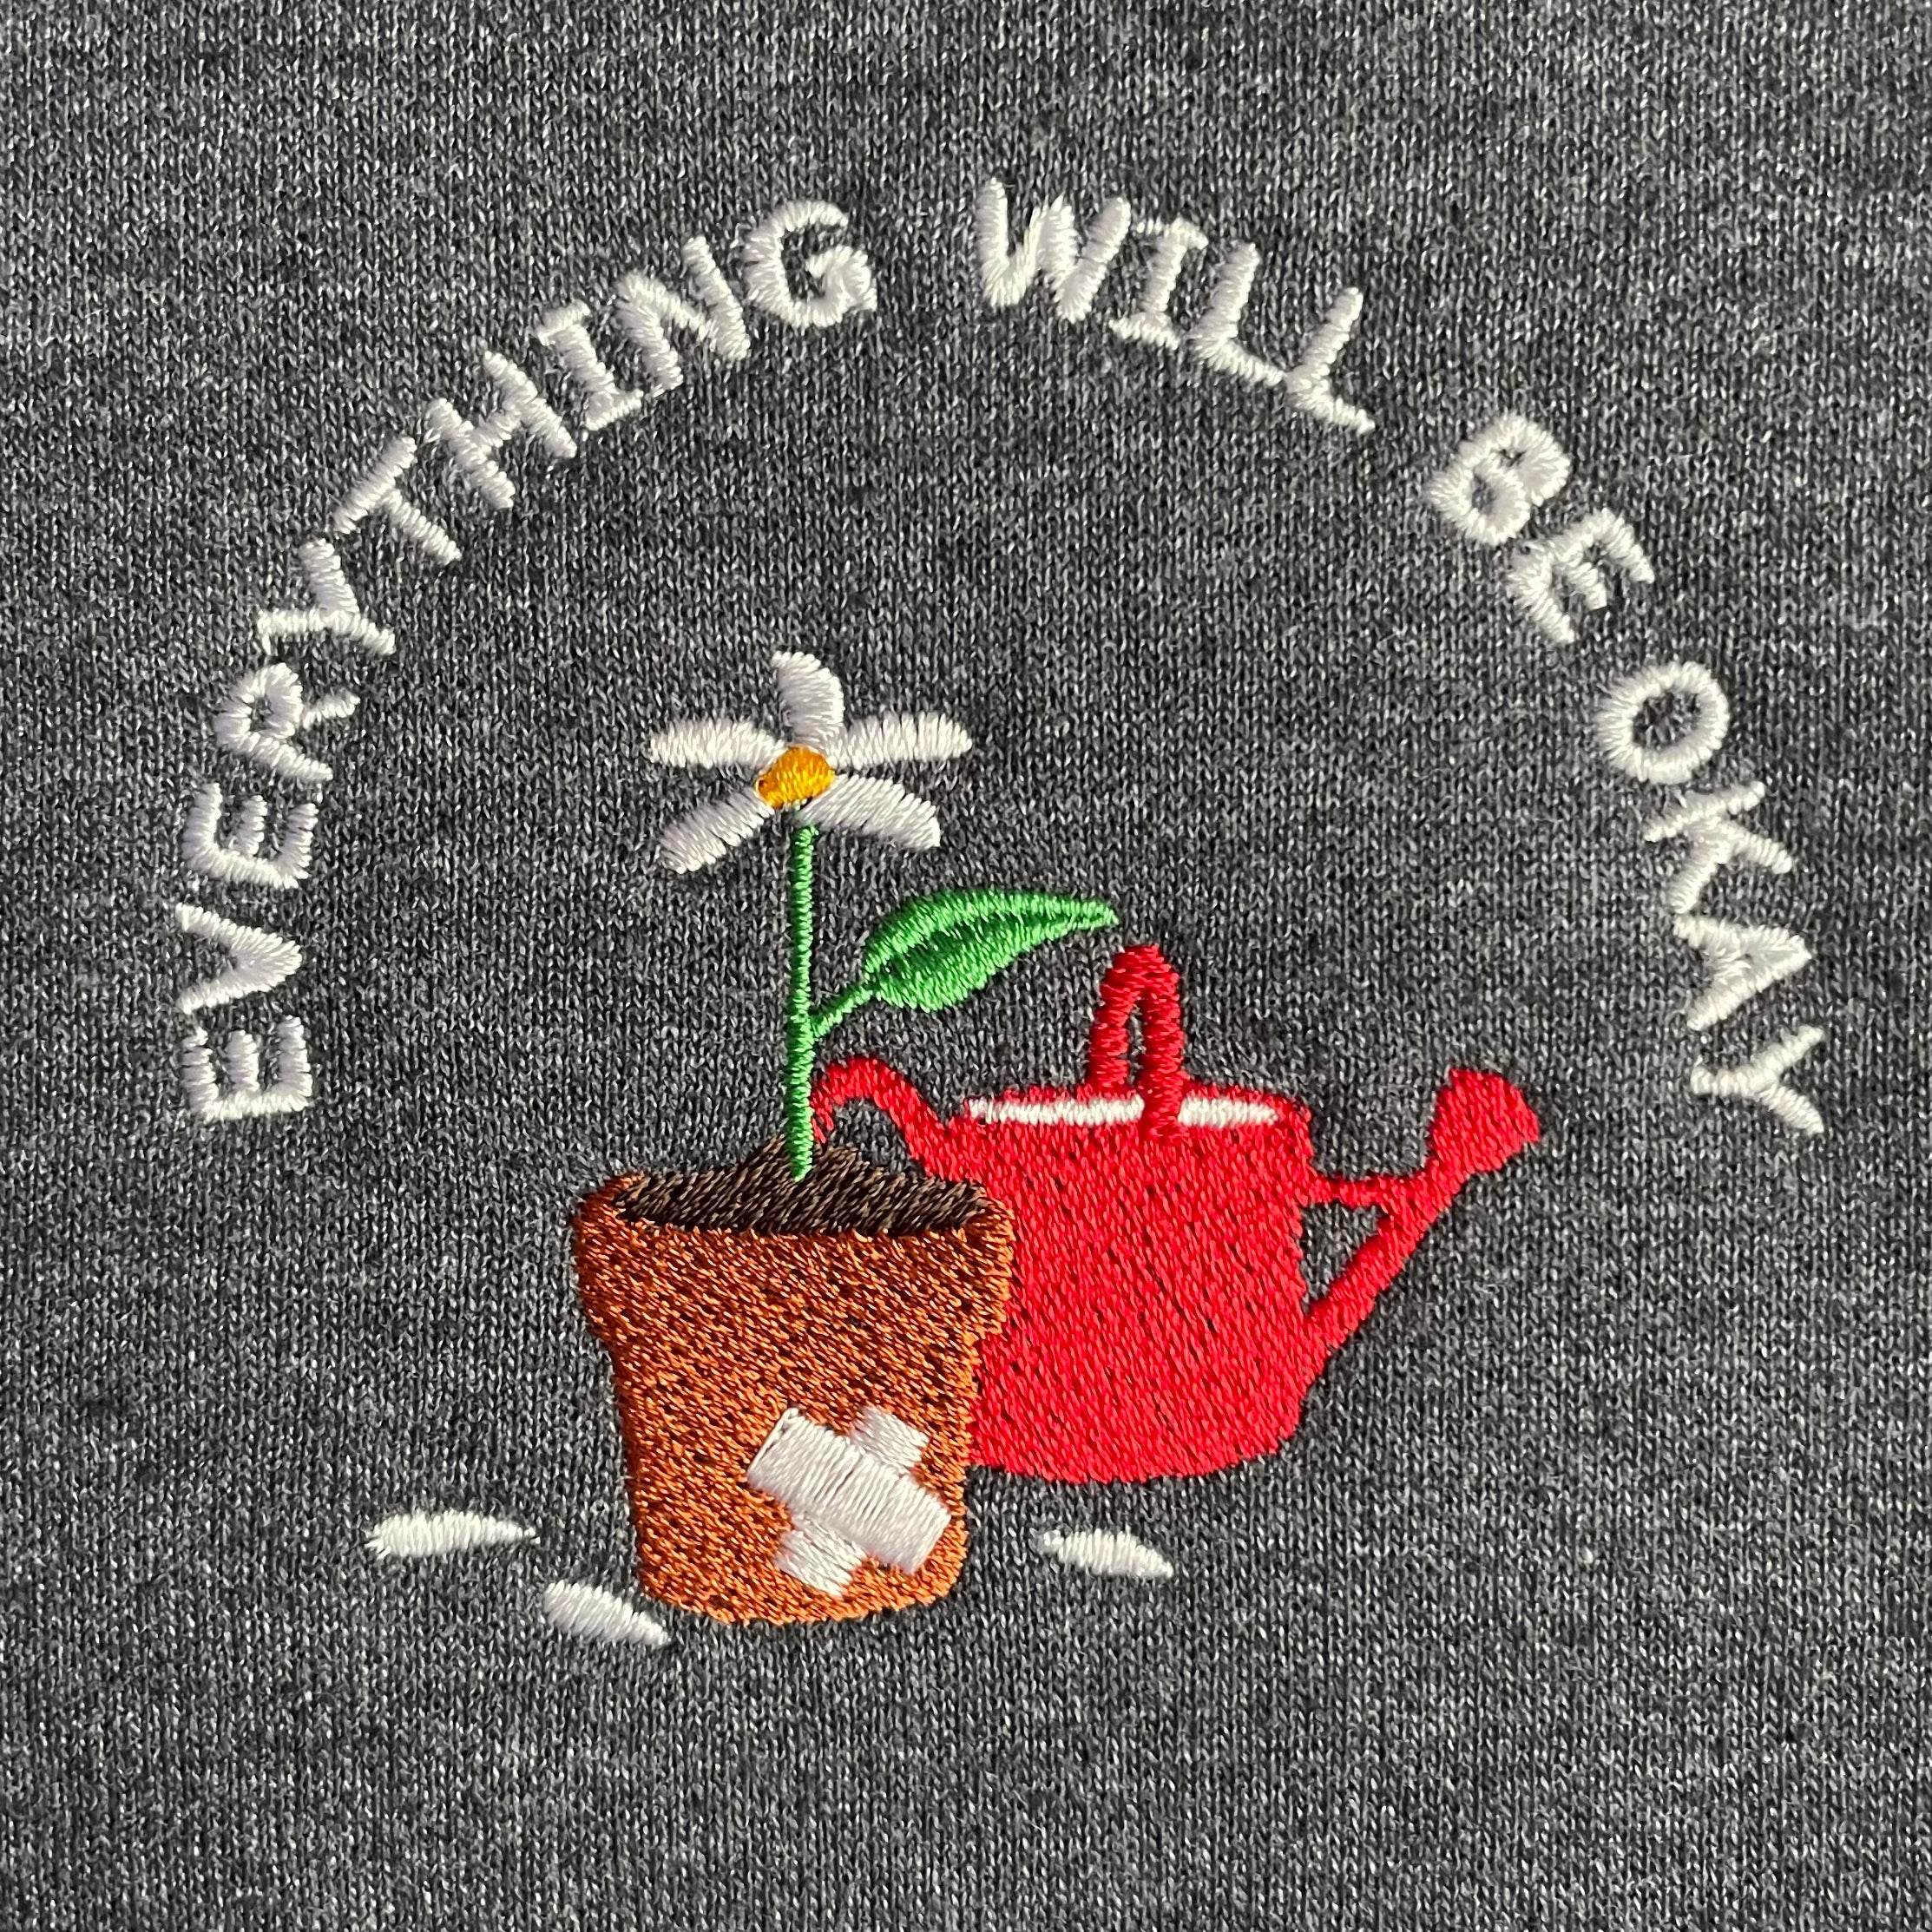 EVERYTHING WILL BE OKAY Embroidered Sweatshirt, Adult Unisex